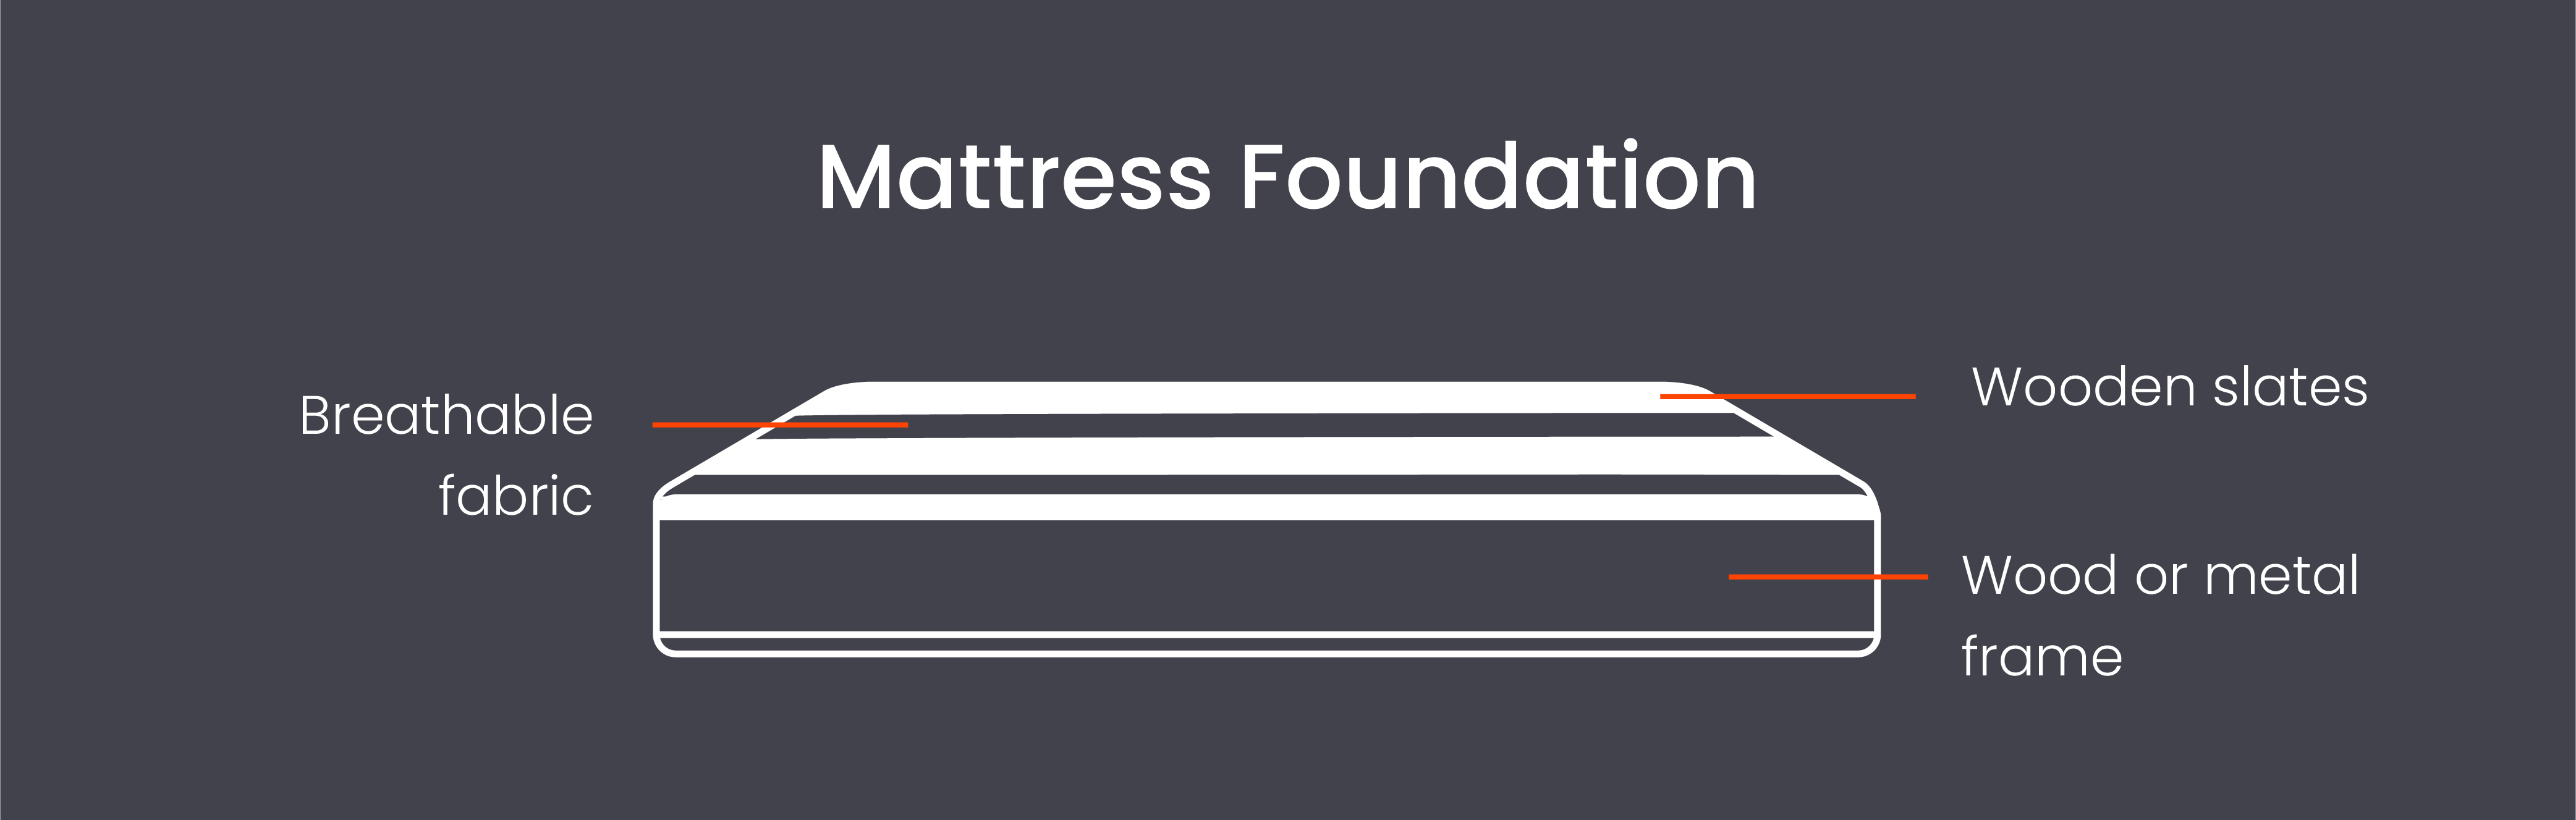 Mattress foundation diagram